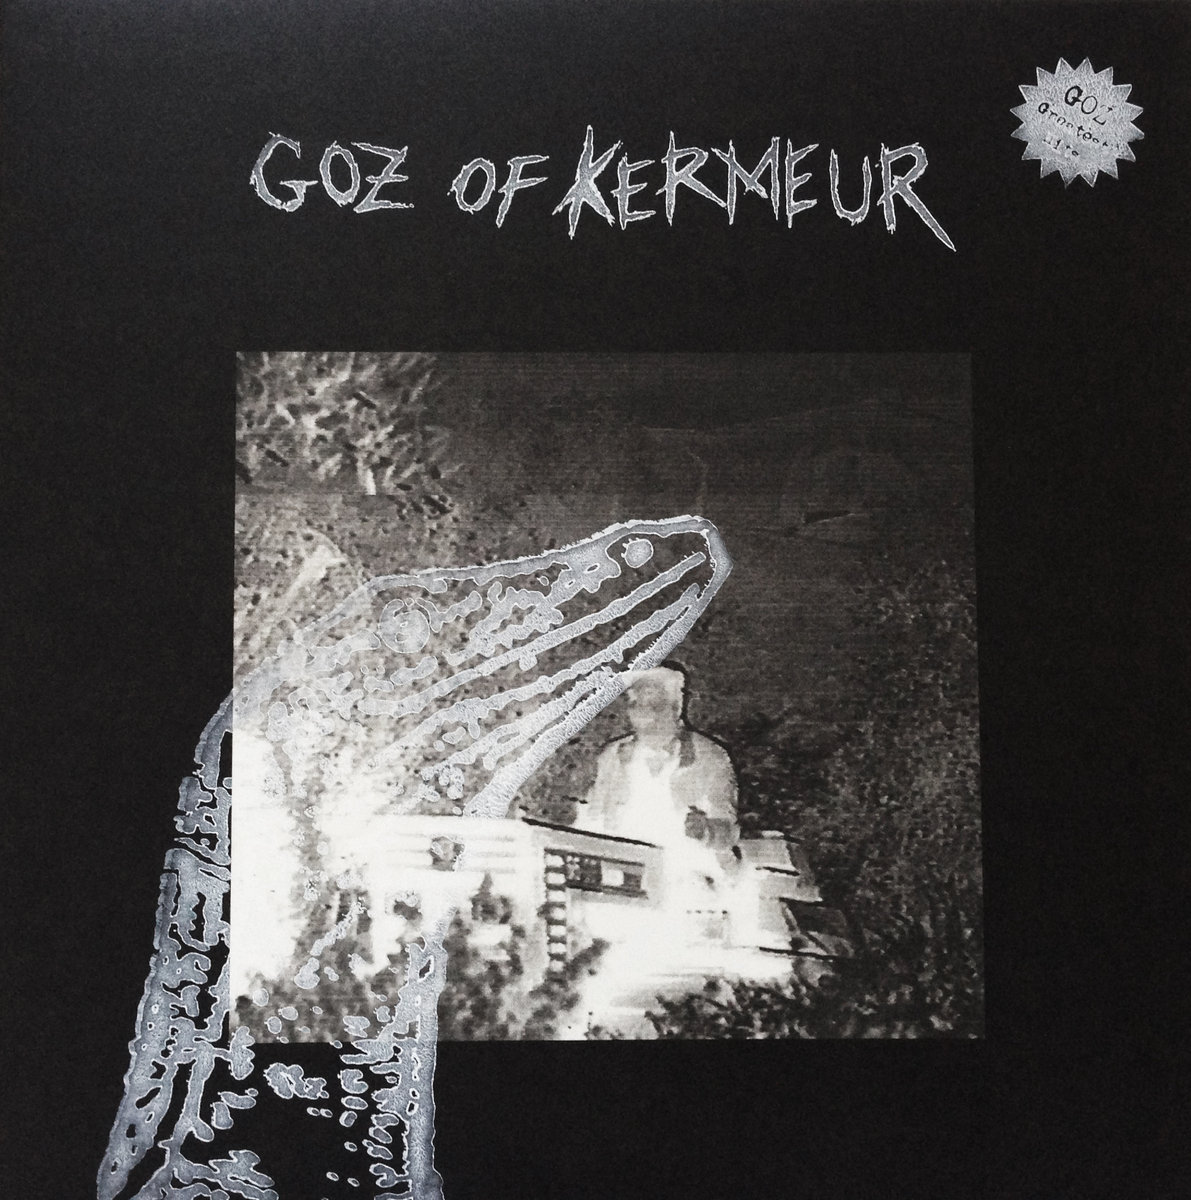 Goz Of Kermeur - Greatest Hits VINYL 2-LP